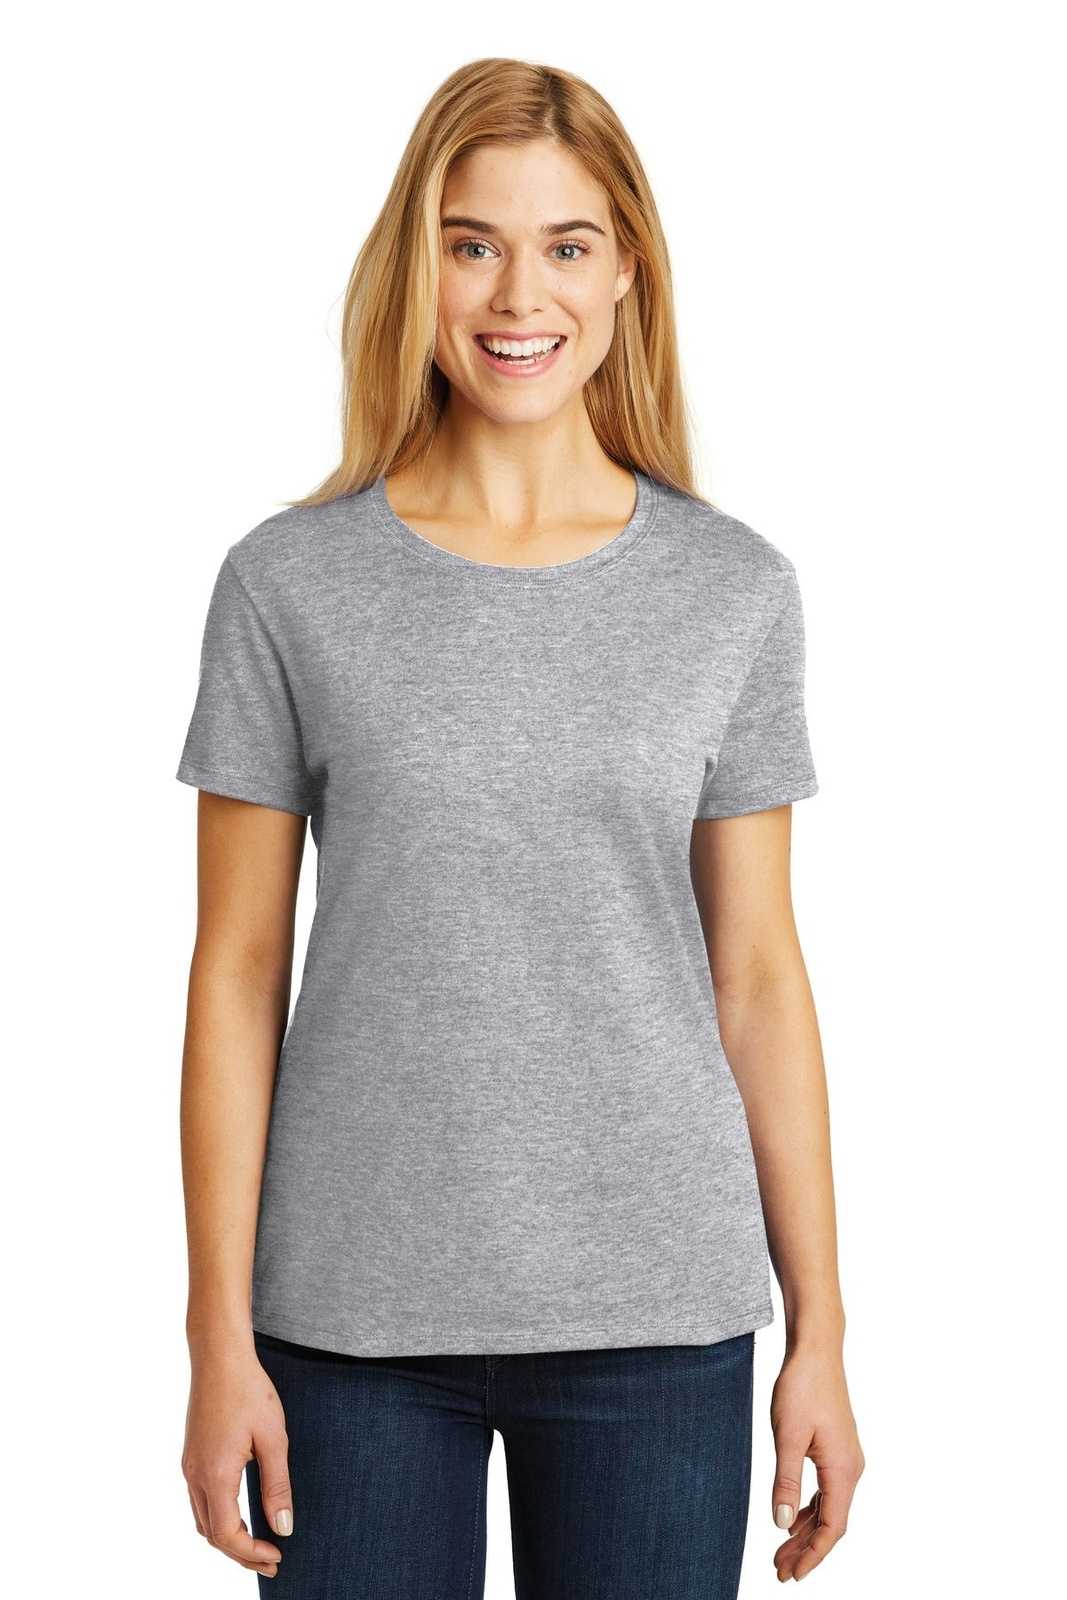 Hanes SL04 Ladies Nano-T Cotton T-Shirt - Light Steel - HIT a Double